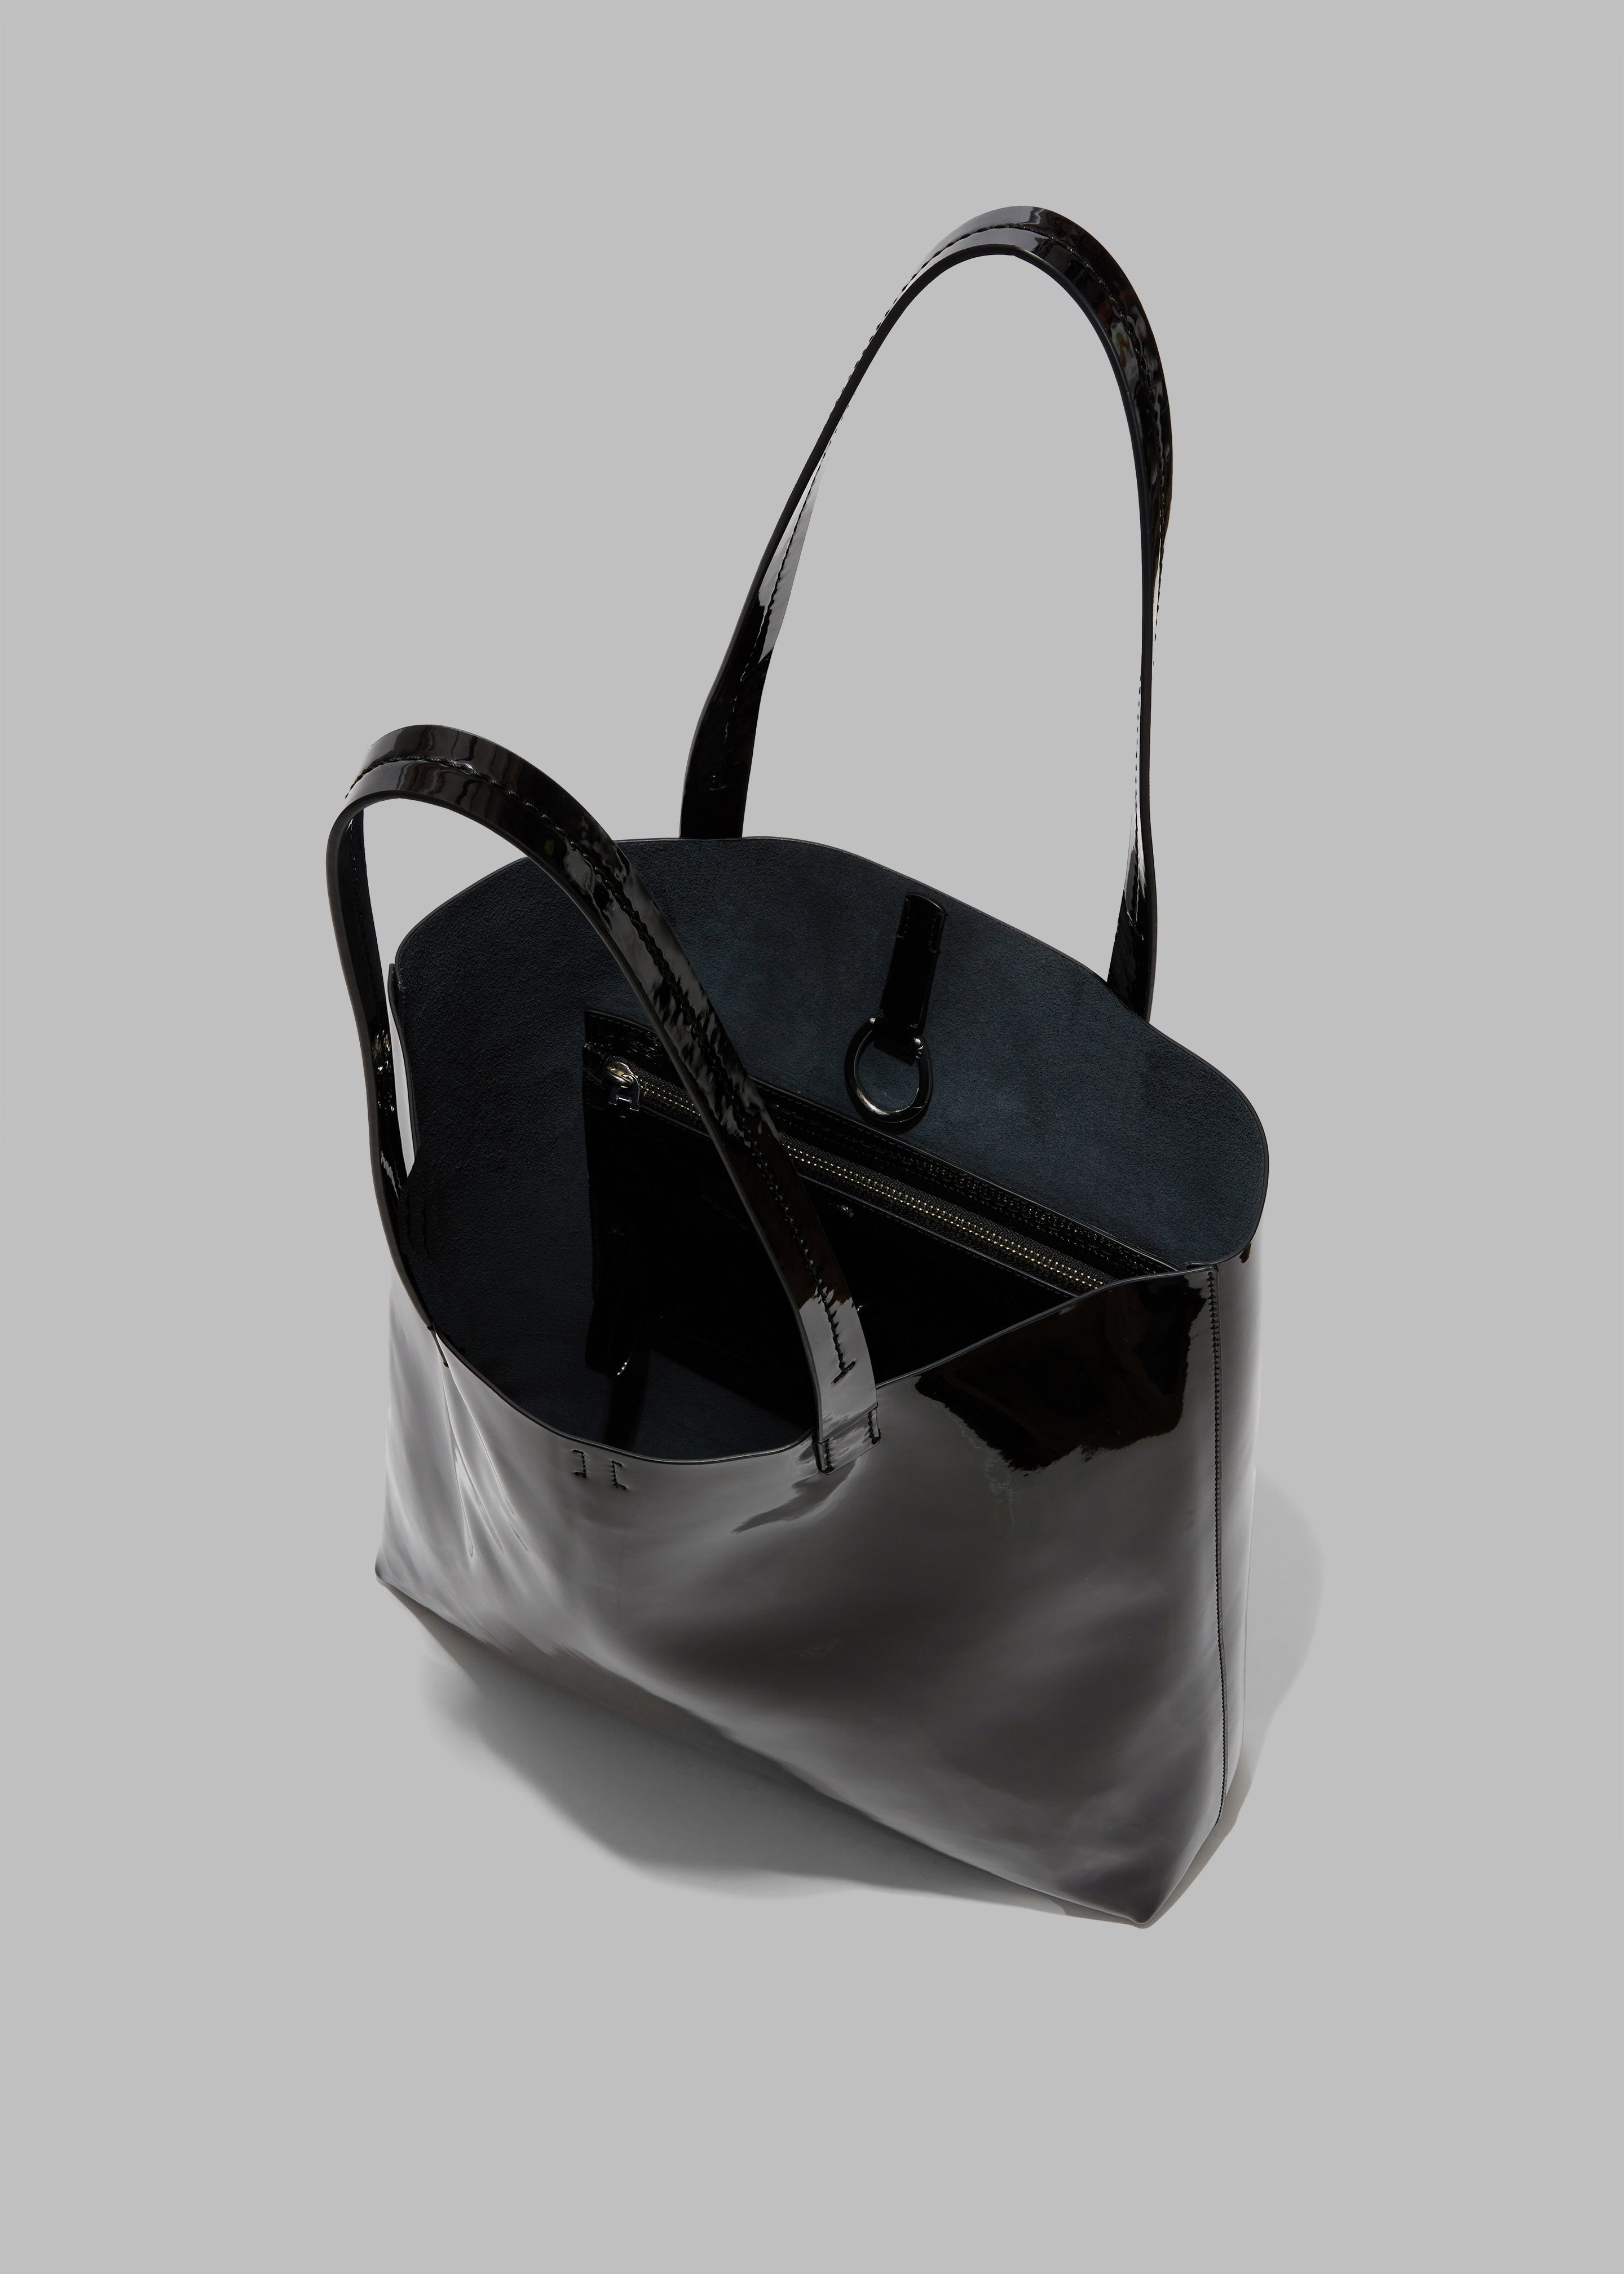 Proenza Schouler White Label Walker Patent Tote Bag - Black - 5